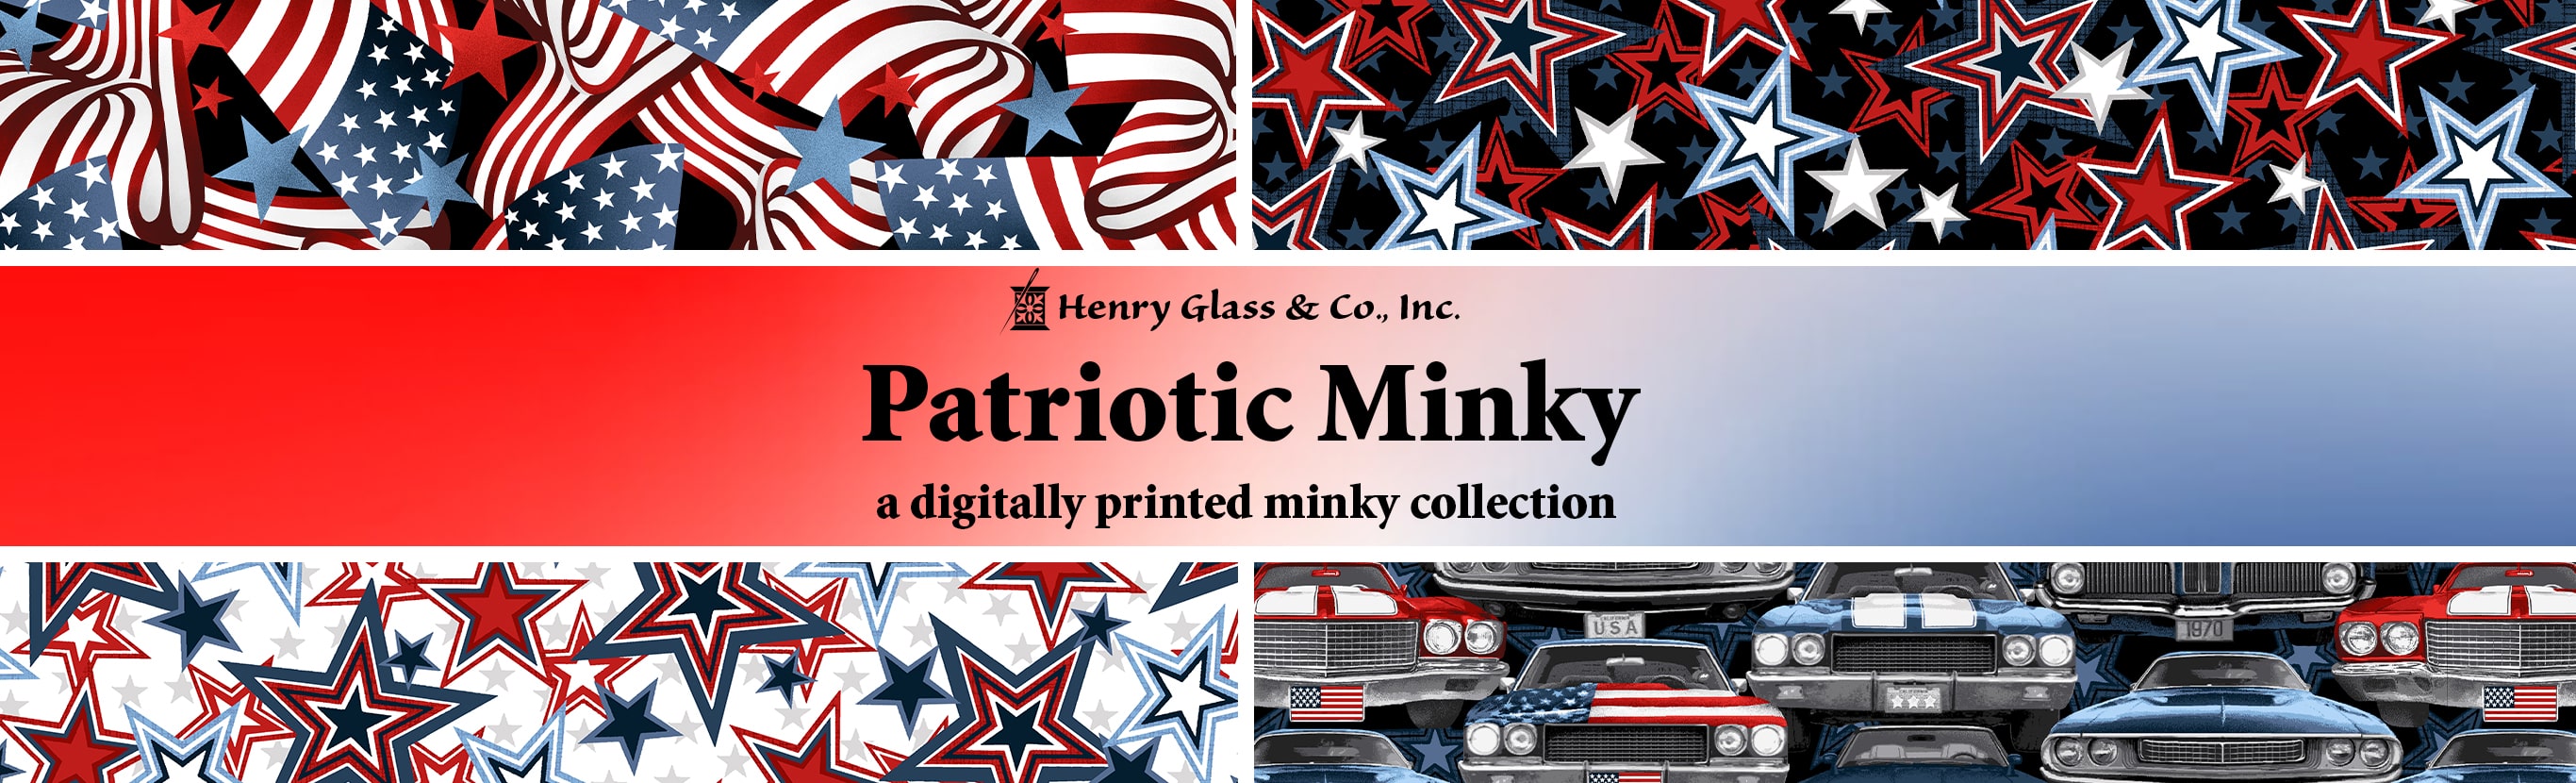 Patriotic Minky